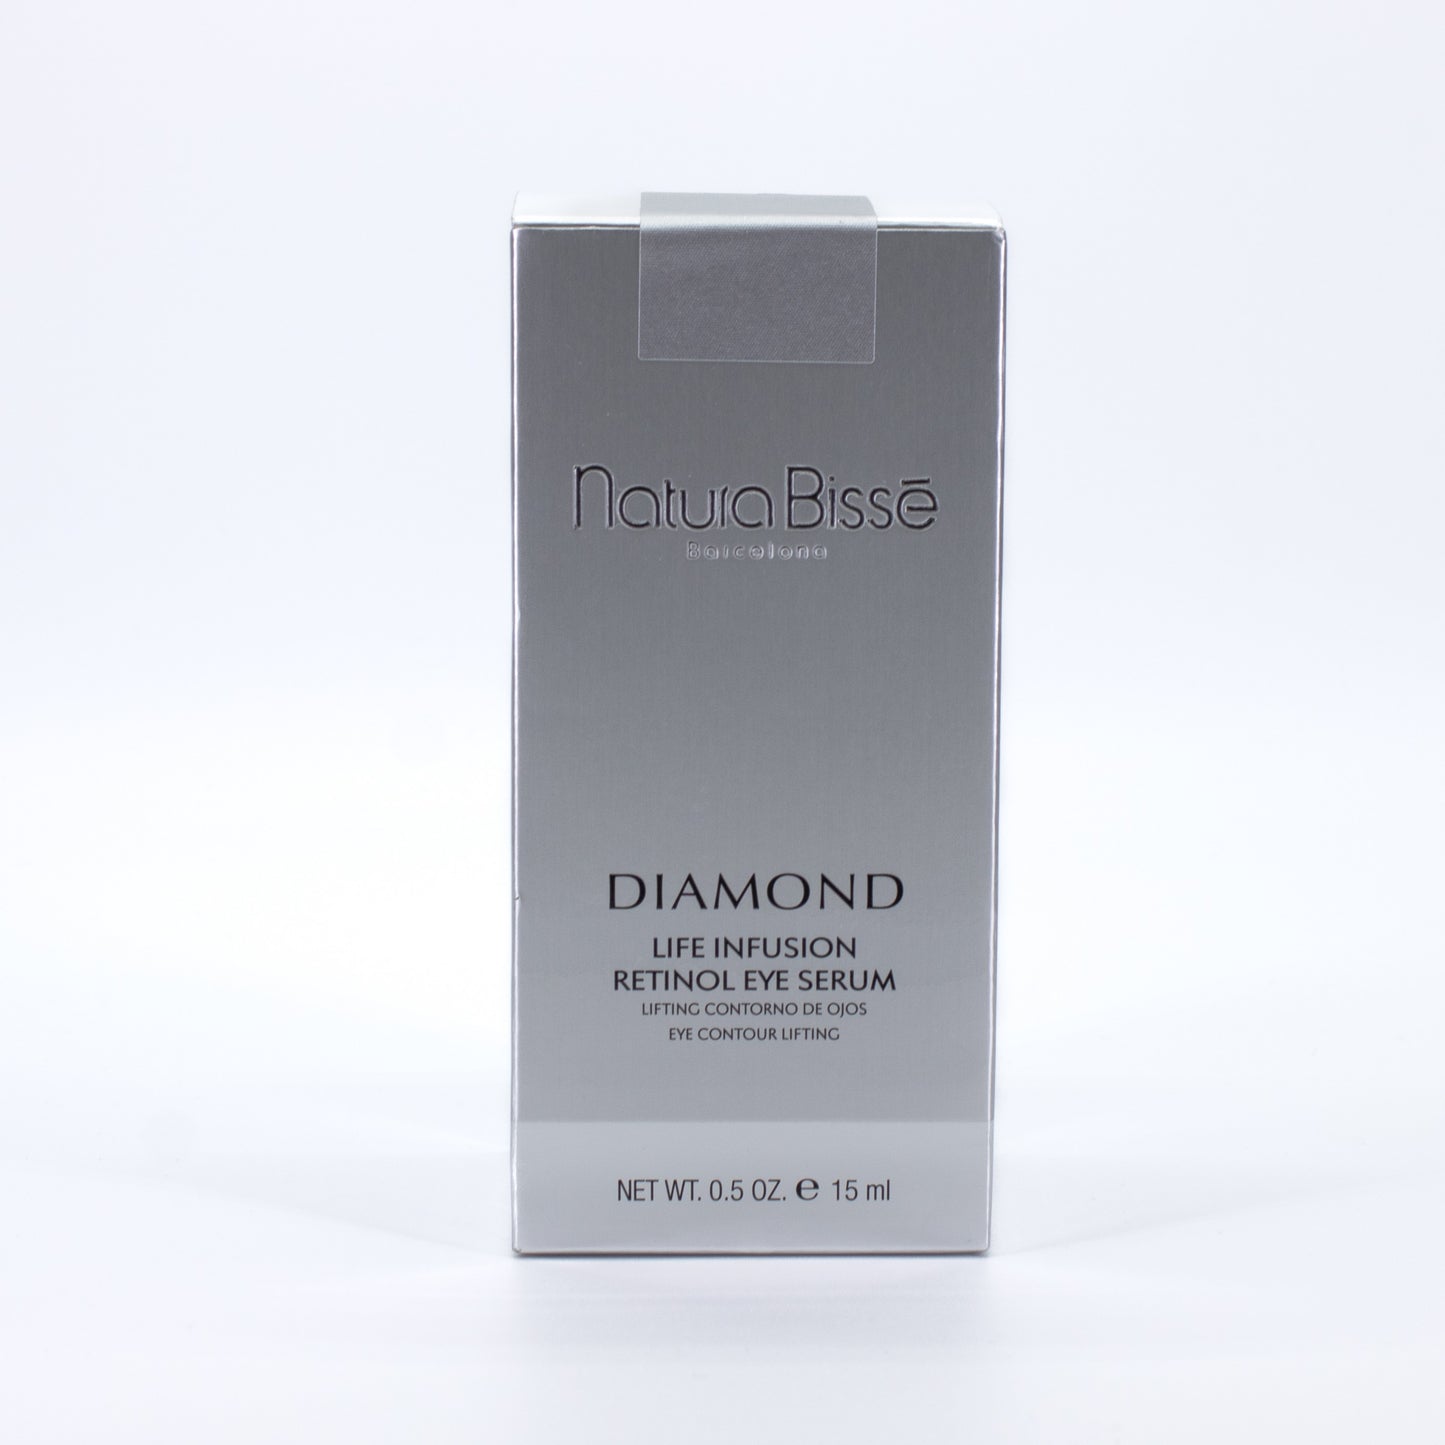 Natura Bisse Diamond Life Infusion Retinol Eye Serum 0.5oz - Imperfect Box